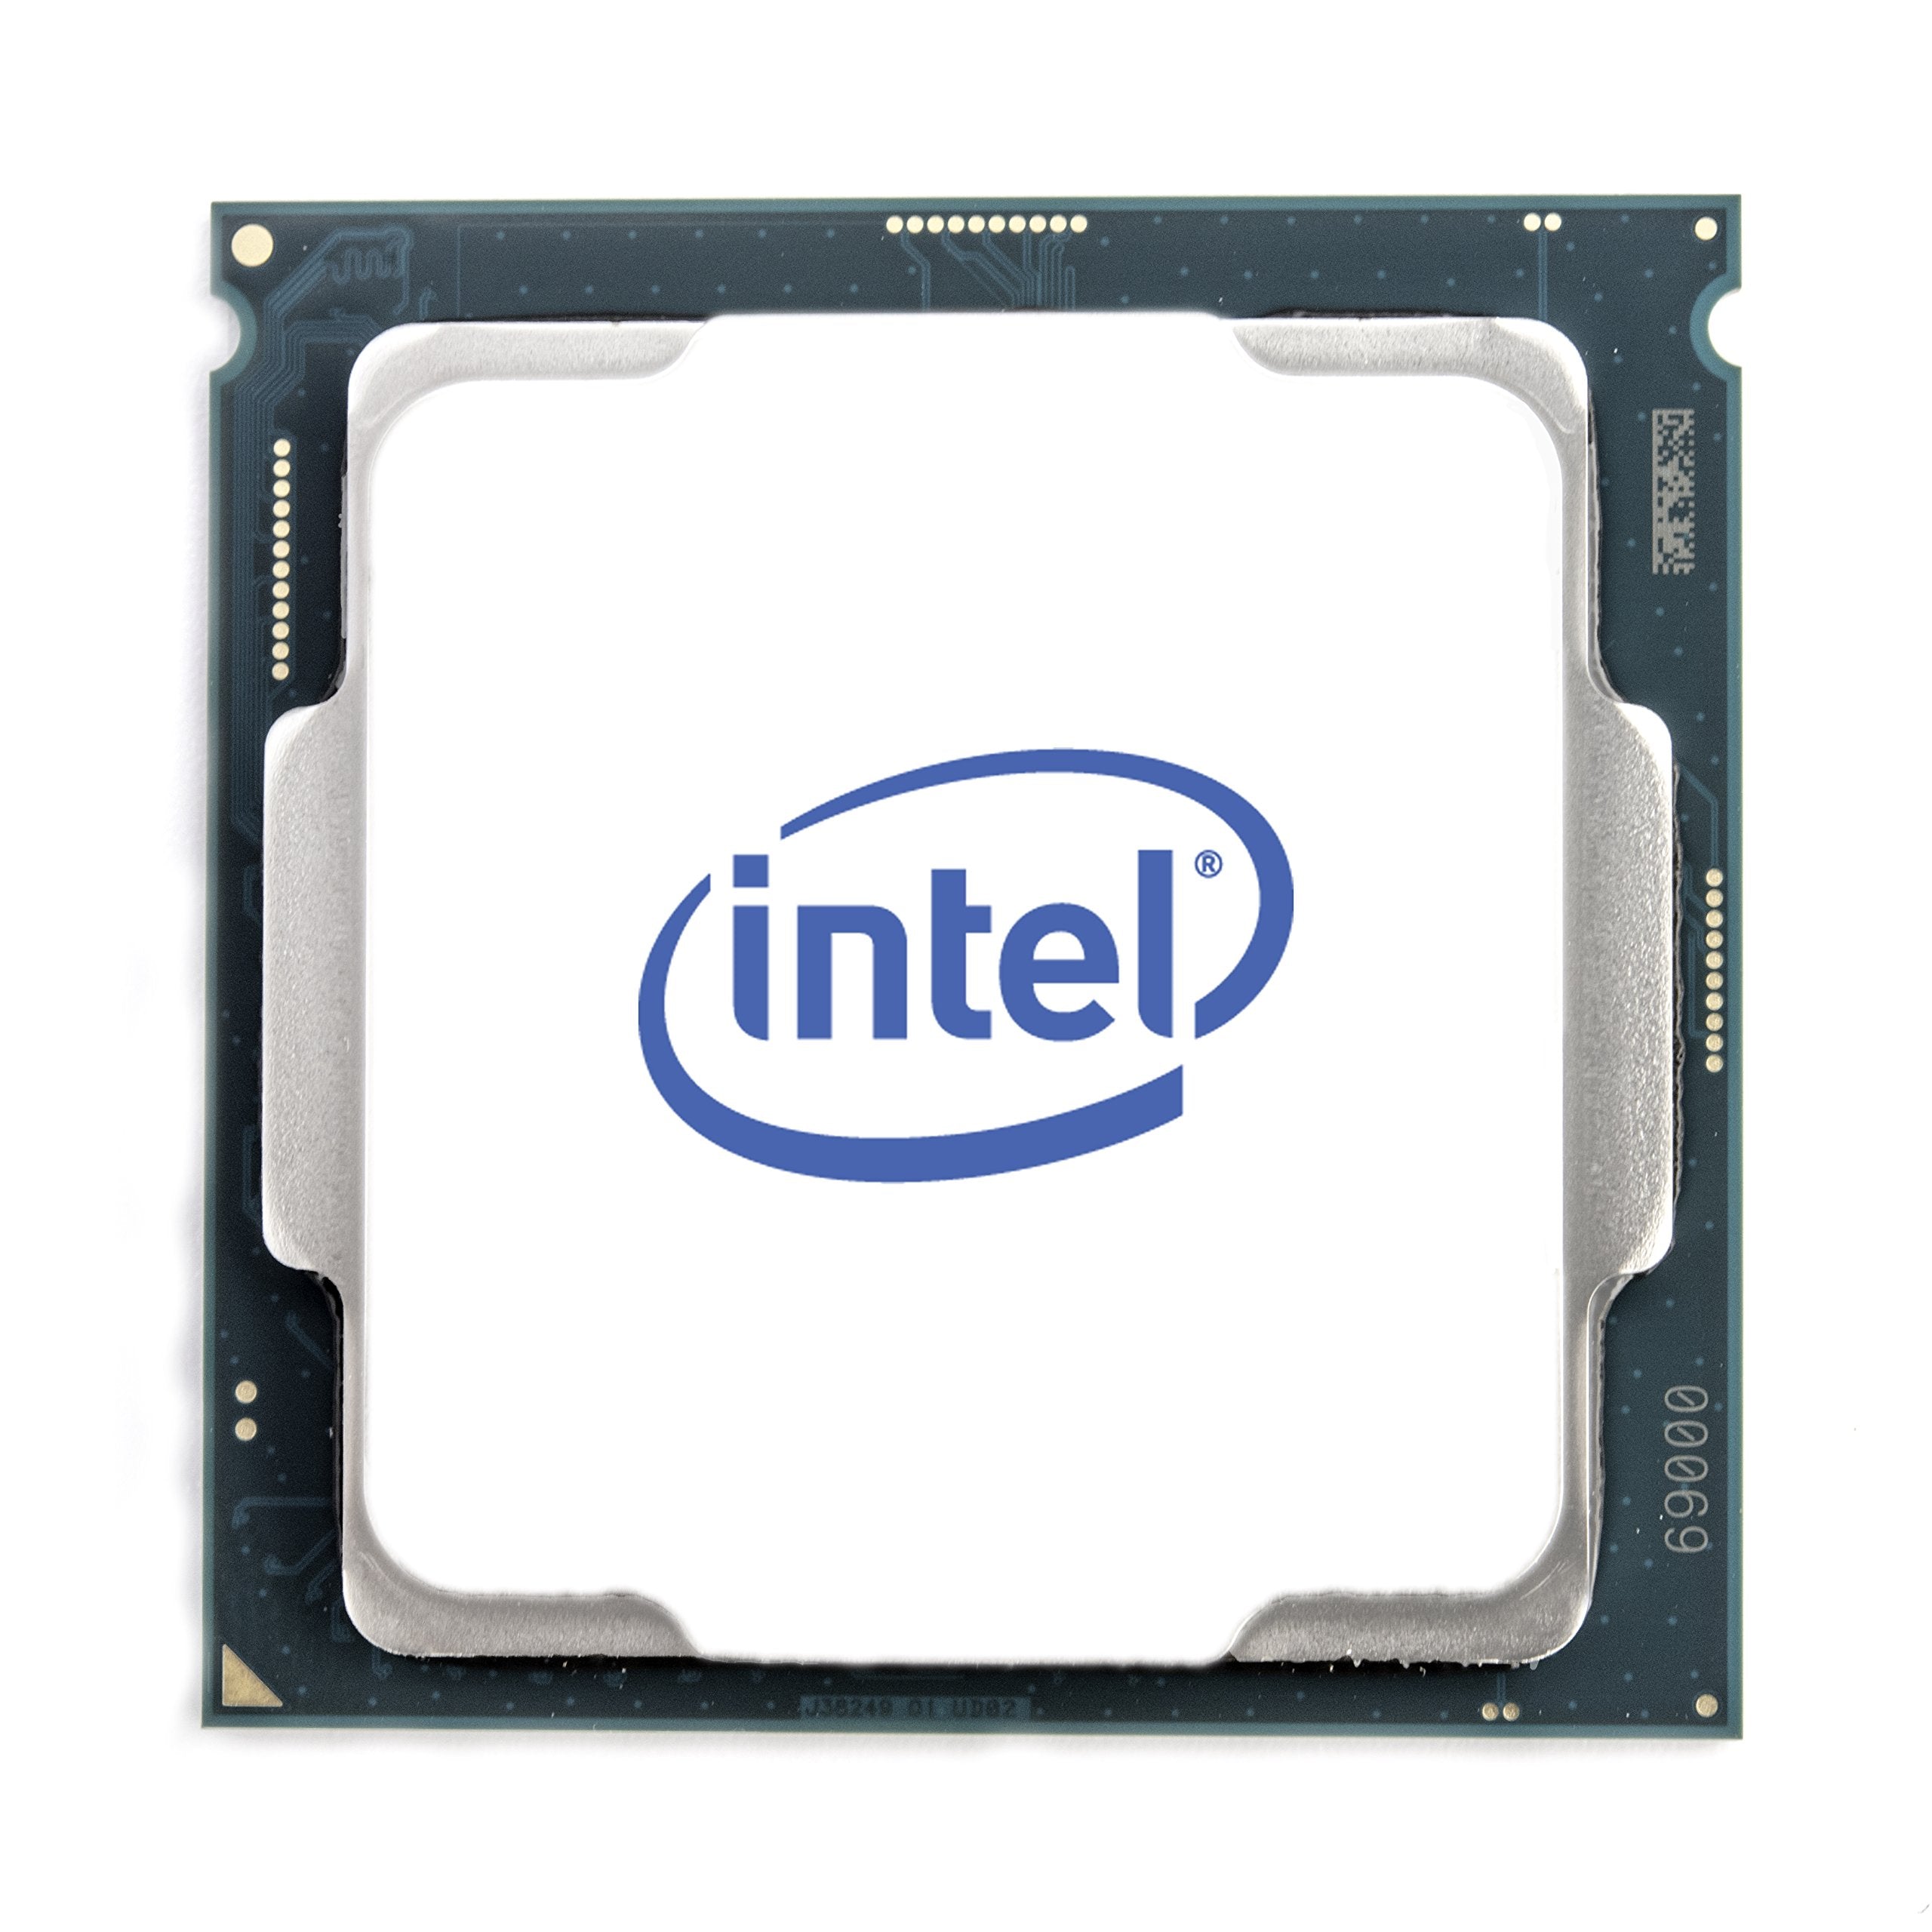 Intel® Core™ i5-8600 Desktop Processor 6 Core up to 4.3GHz Turbo LGA1151 300 Series 65W